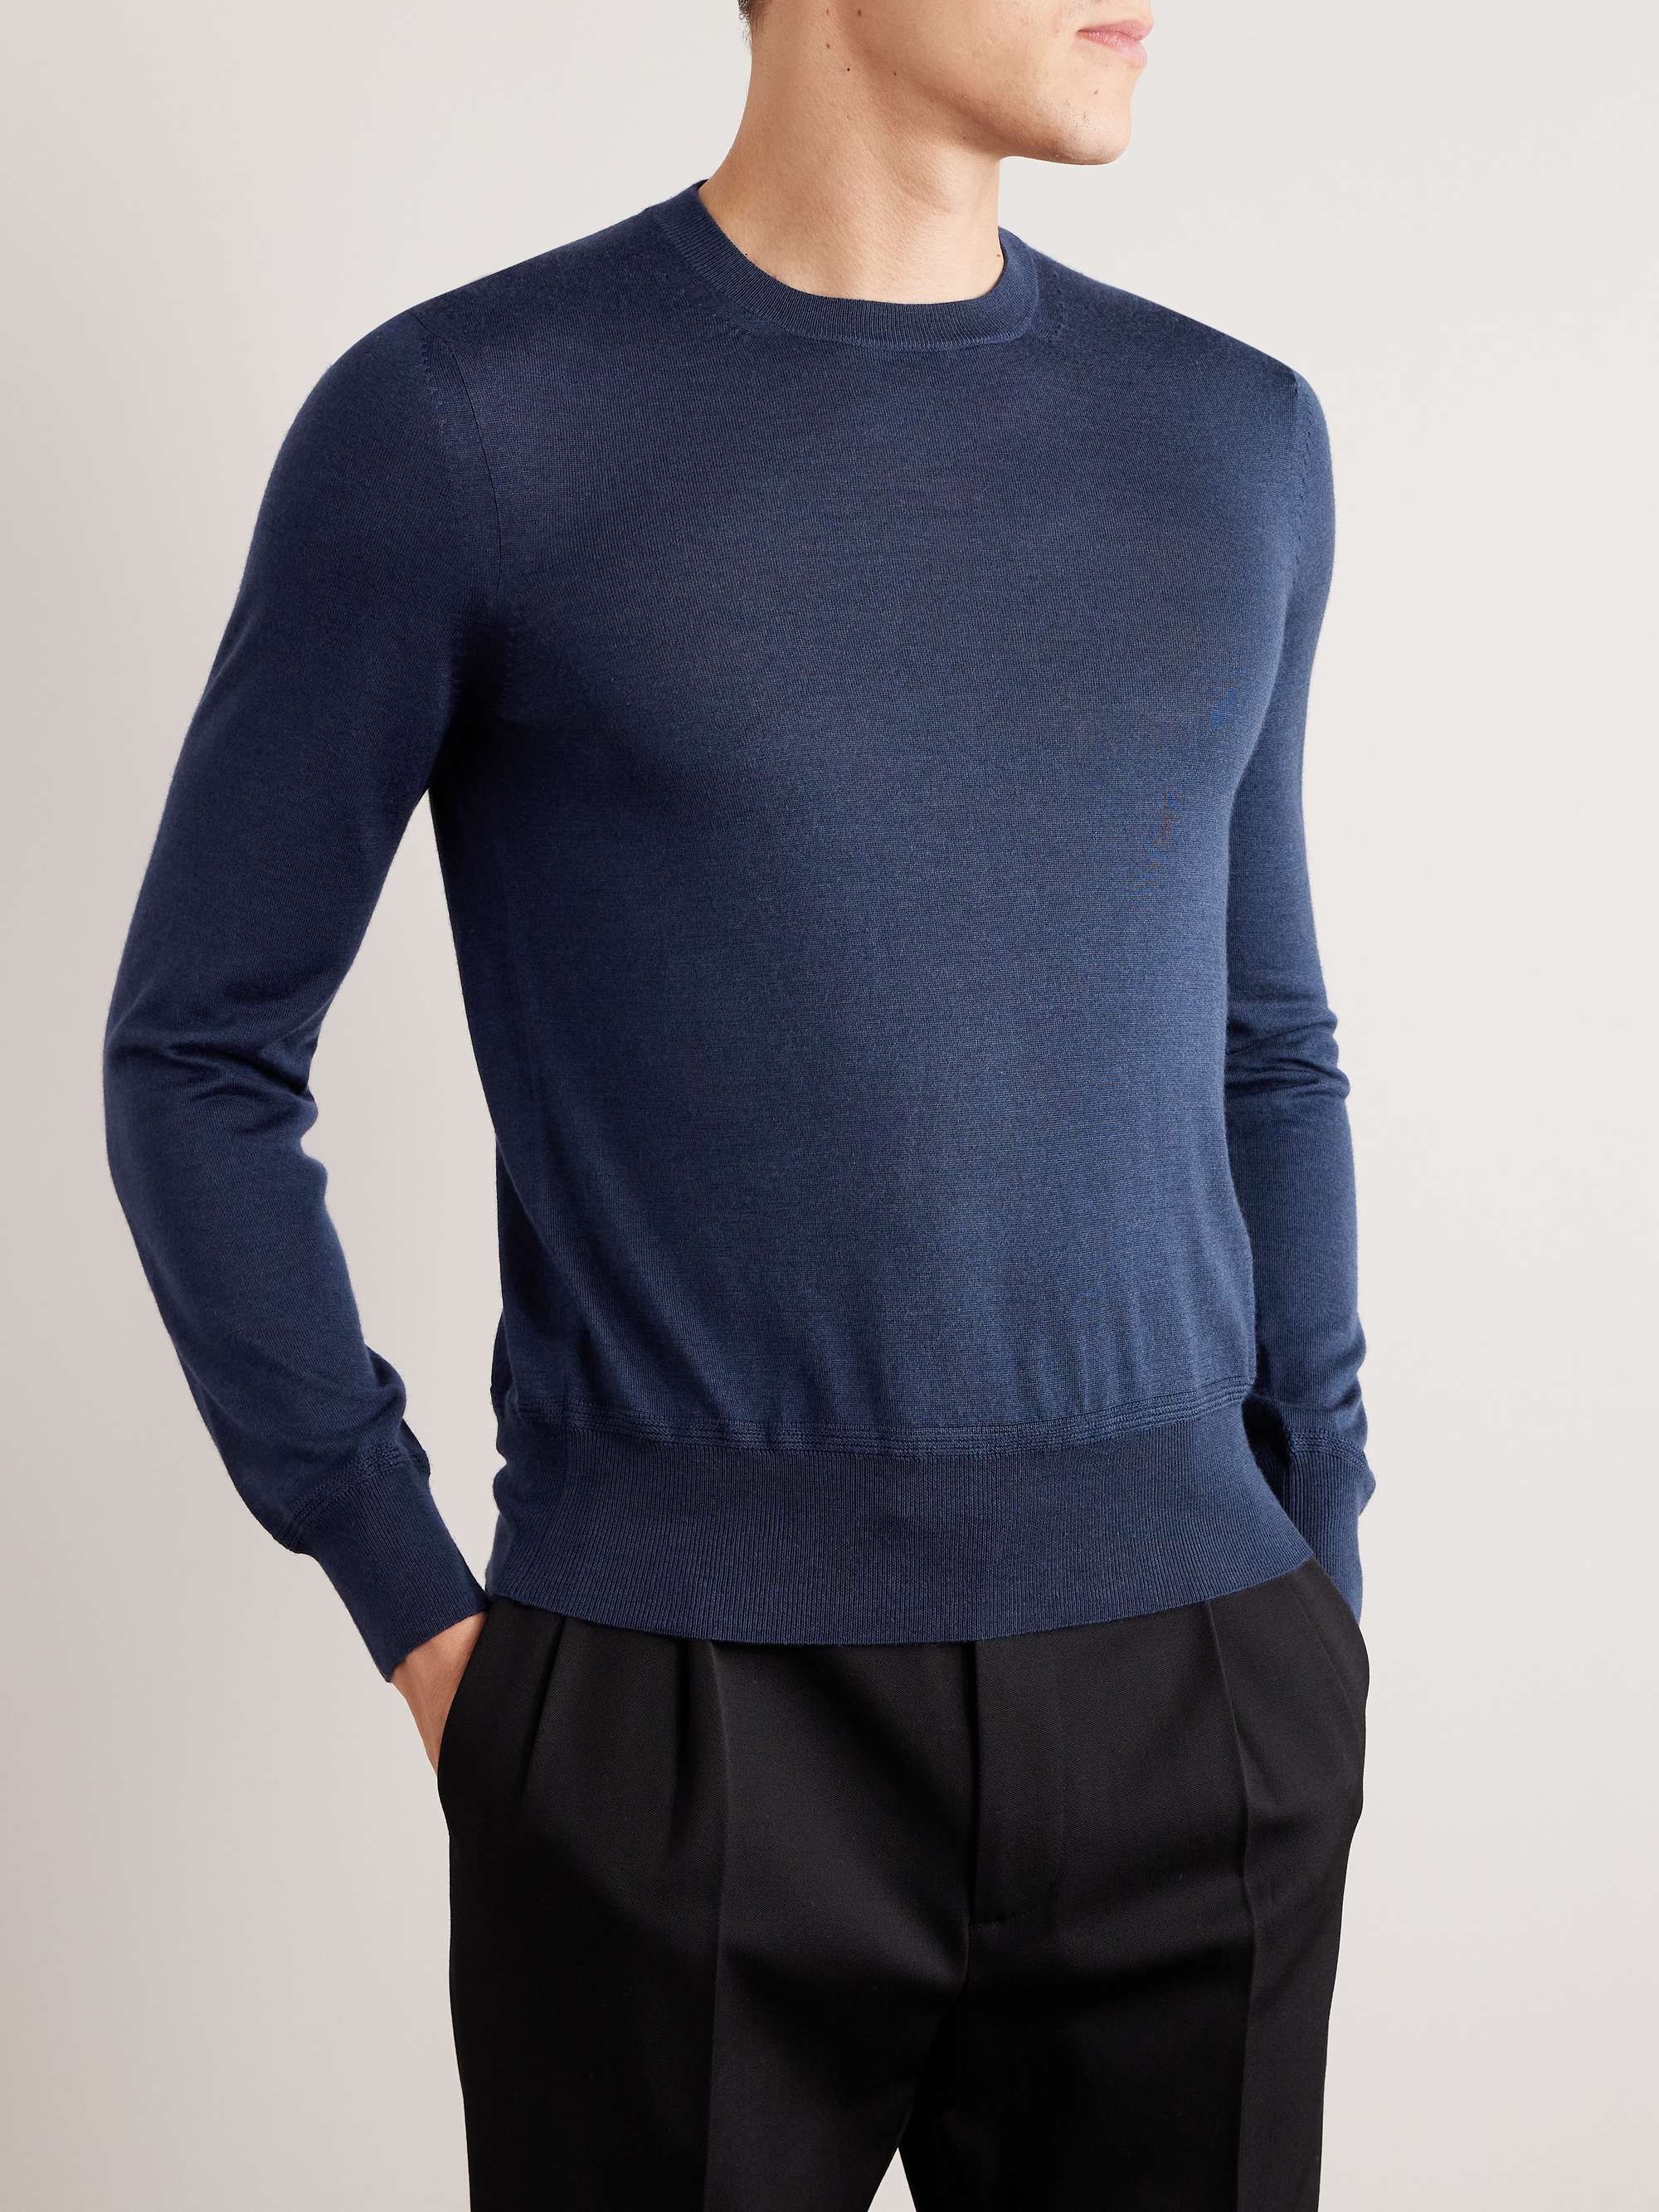 TOM FORD Slim-Fit Cashmere and Silk-Blend Sweater for Men | MR PORTER